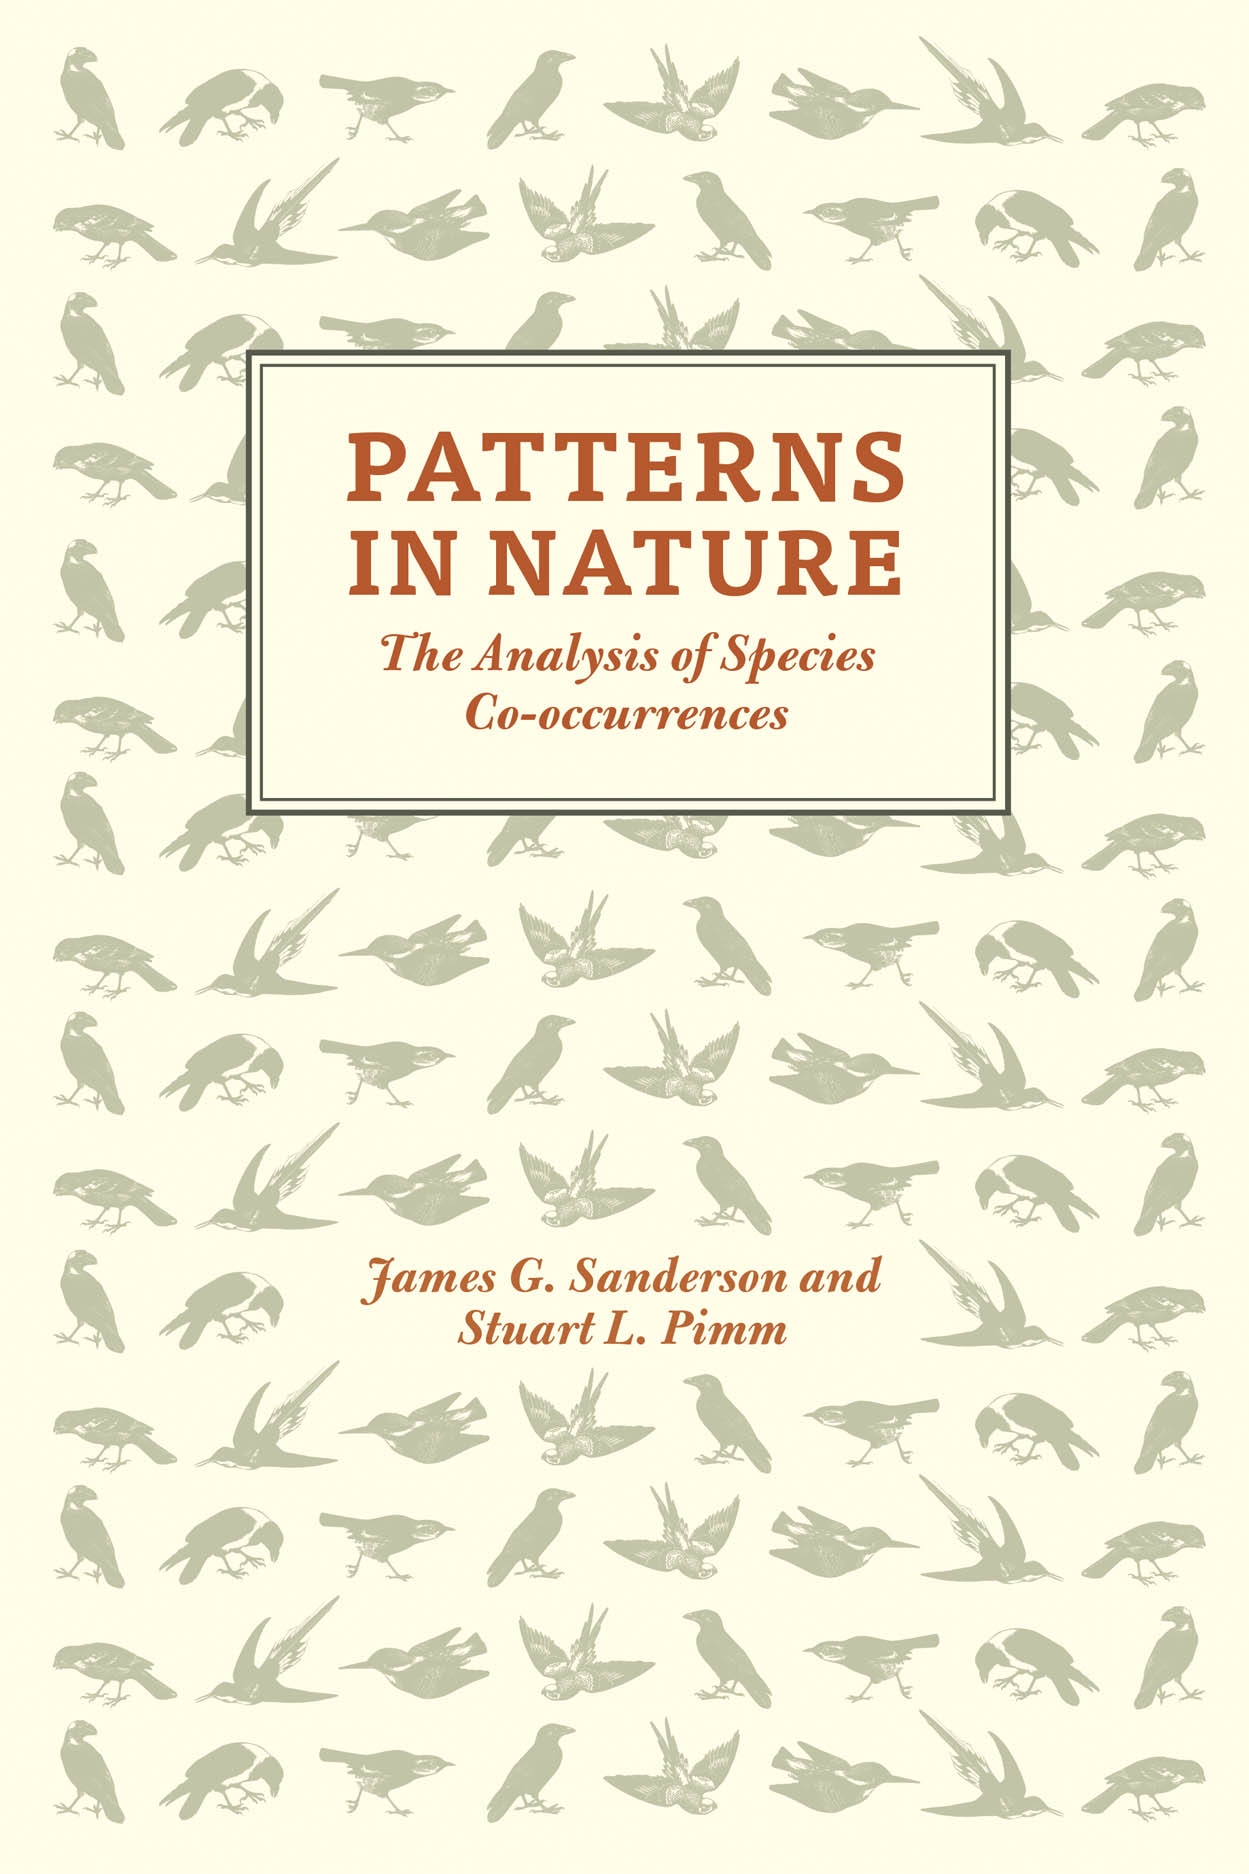 Books & Patterns